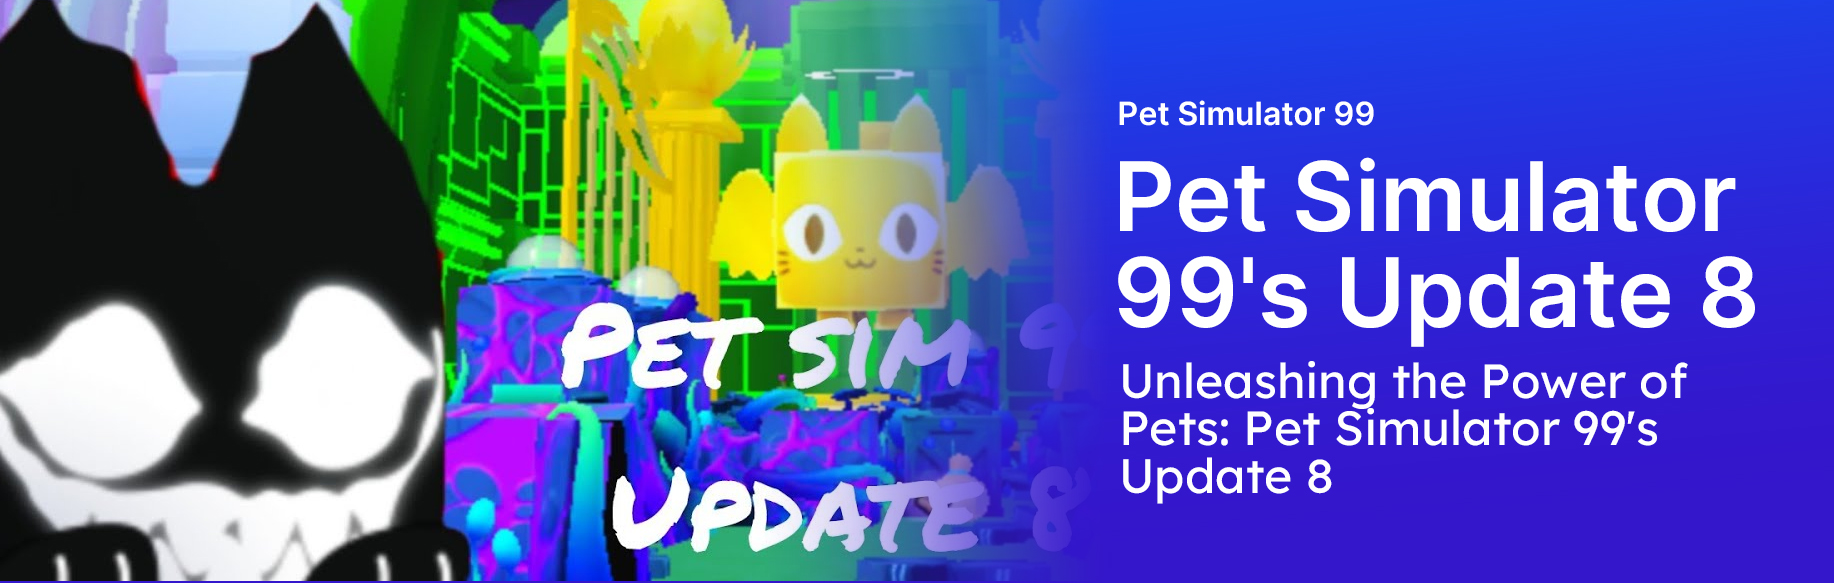 Unleashing the Power of Pets: Pet Simulator 99's Update 8